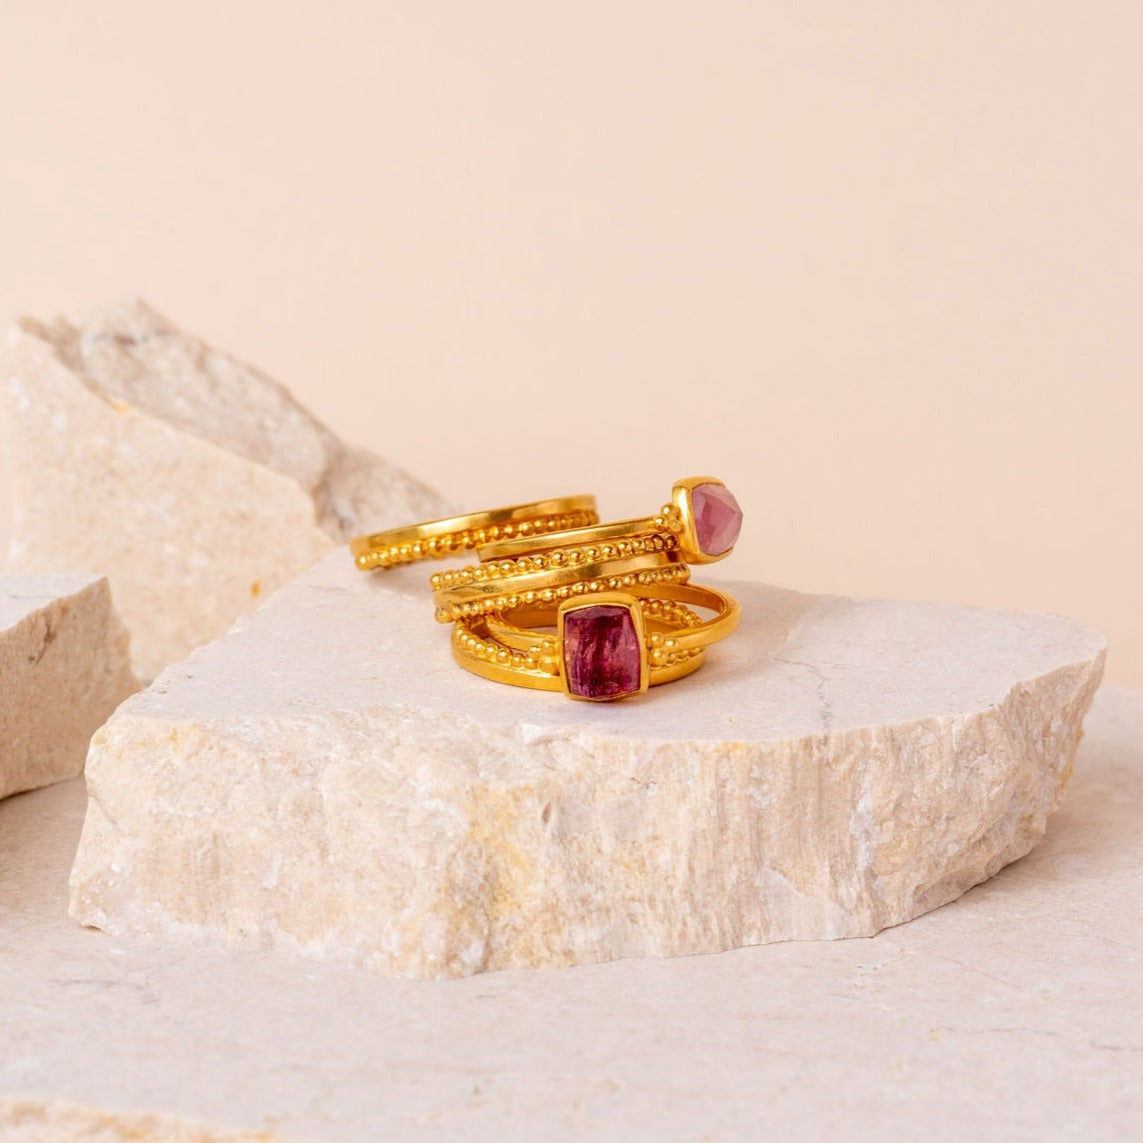 Distinctive gold ring stack adorned with vibrant pink rose-cut tourmaline gemstones and delicate granulation detailing.